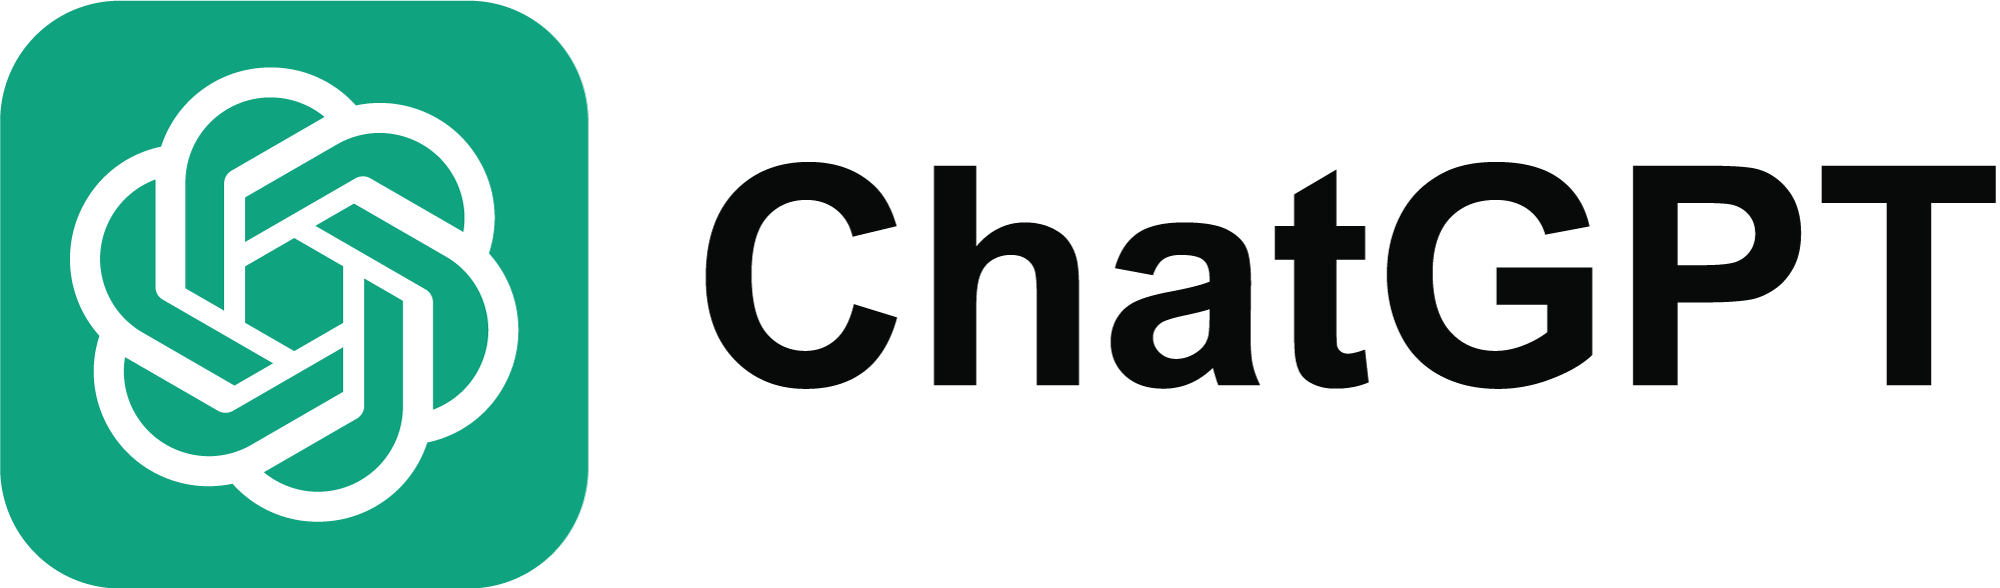 ChatGpt-logo